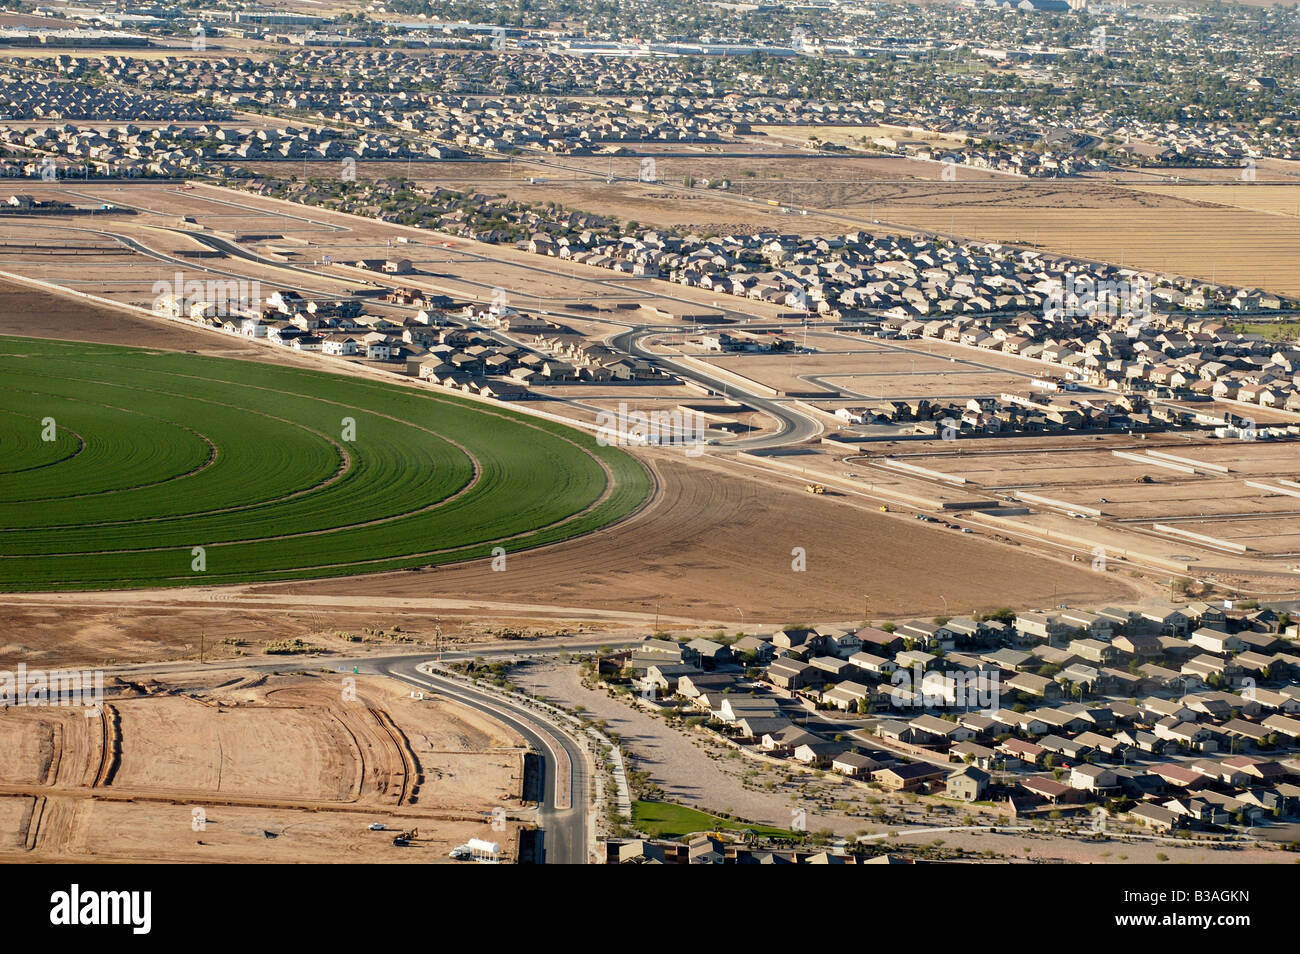 Aerial view of a new housing development on the edge of farm crops near in Casa Grande Arizona Stock Photo